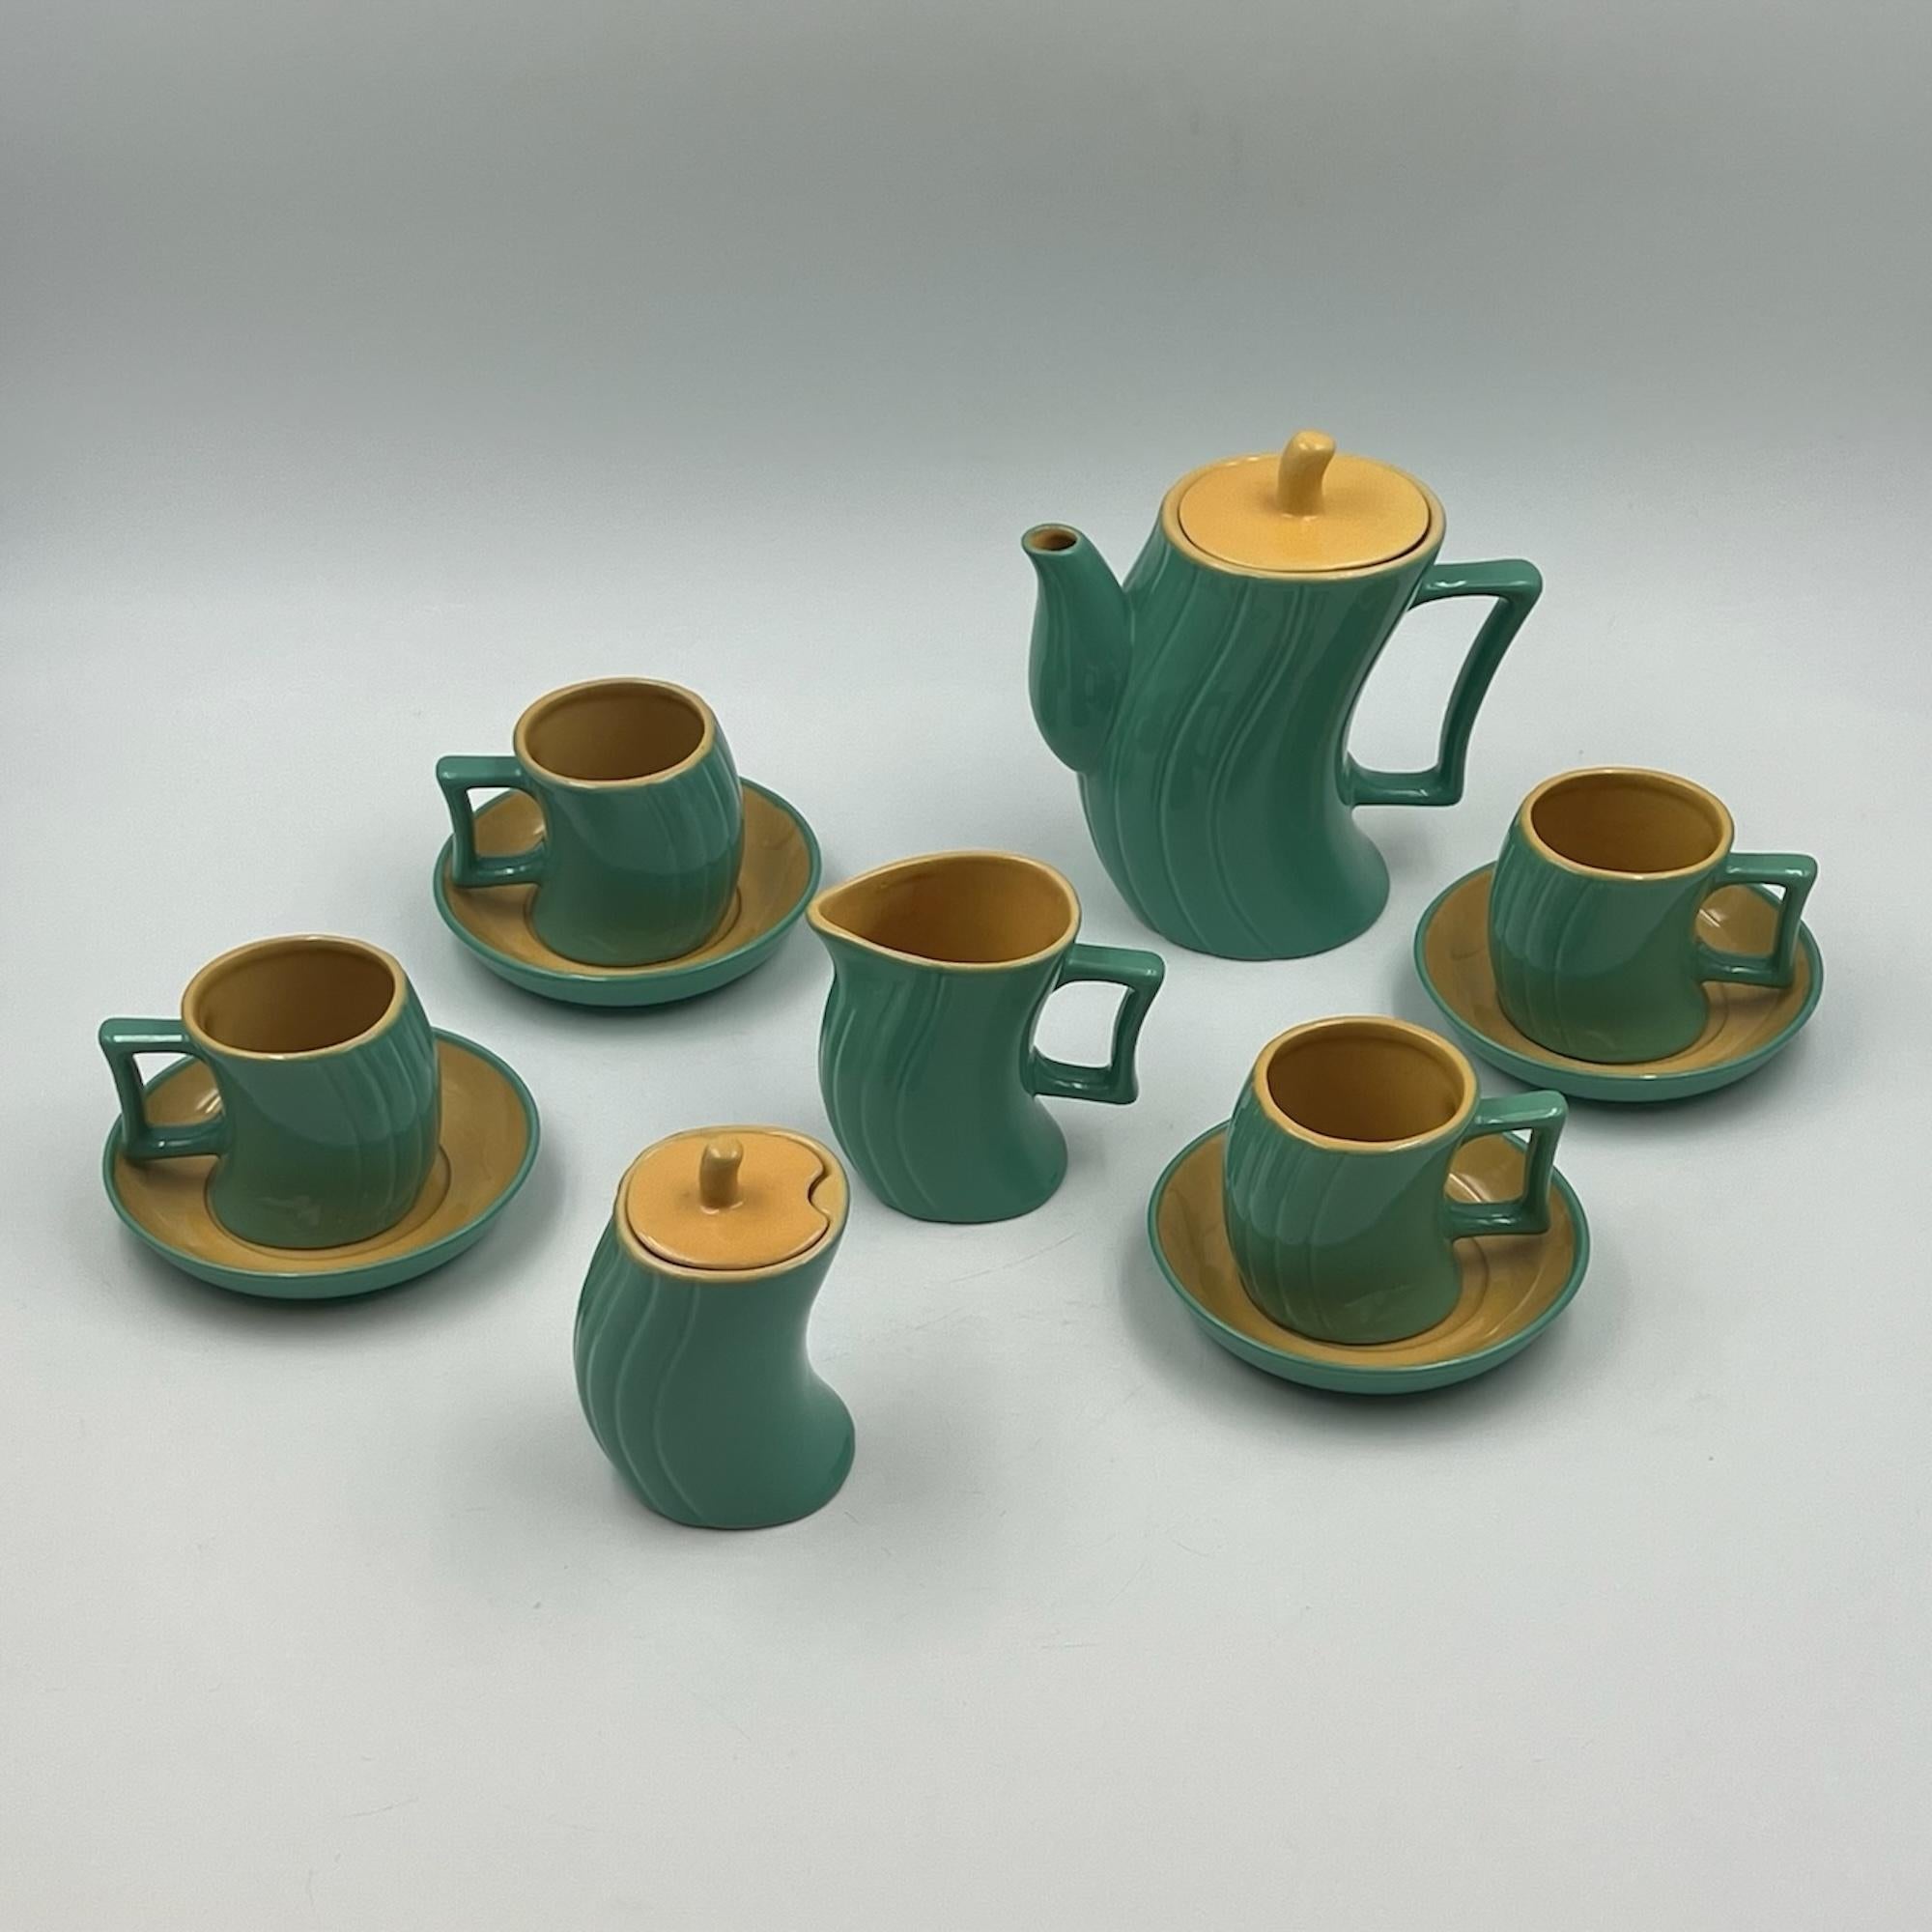 Vintage Memphis Naj Oleari Ceramic Tea Set by Massimo Iosa Ghini - 1980s For Sale 2